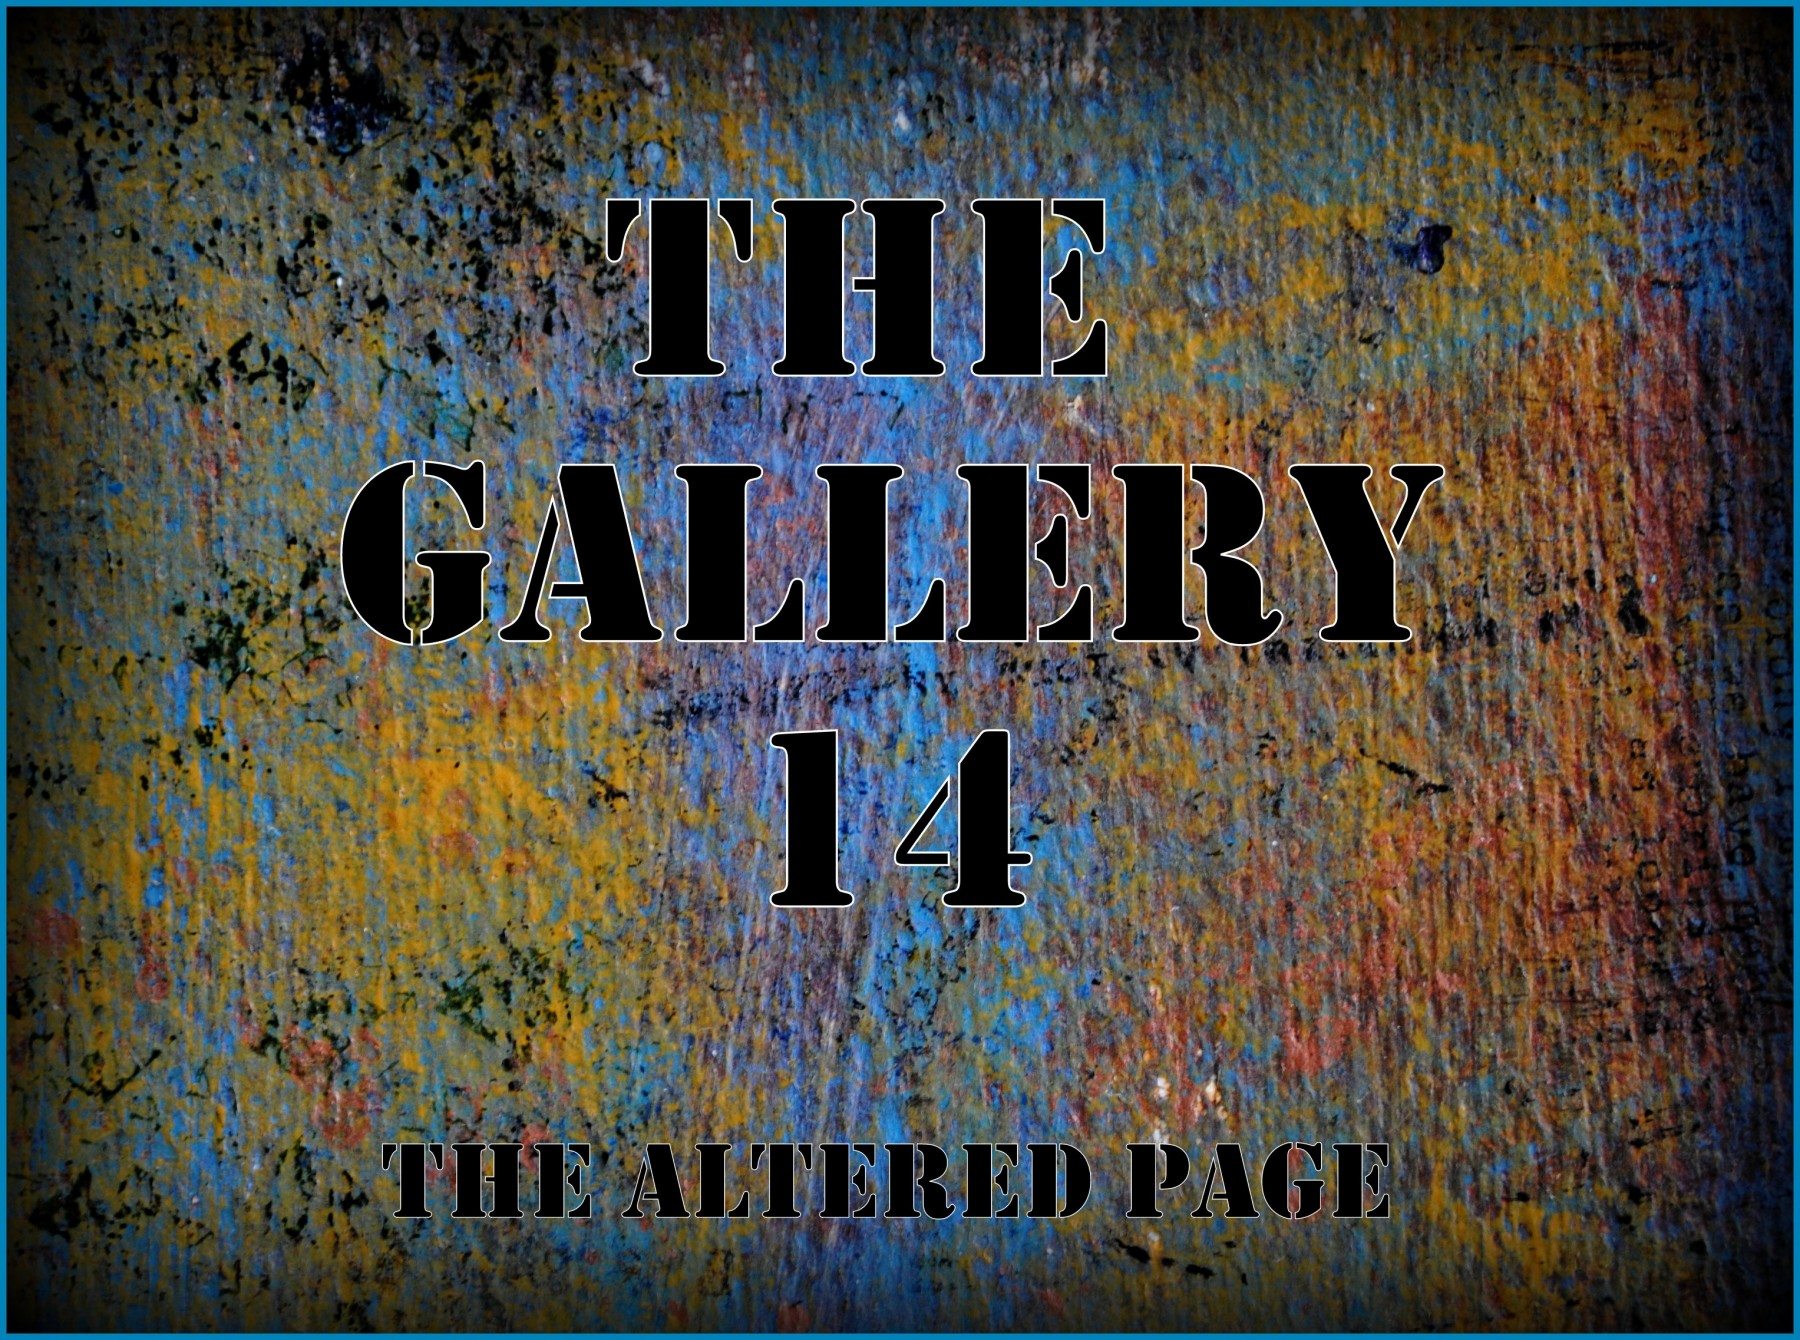 Gallery 14